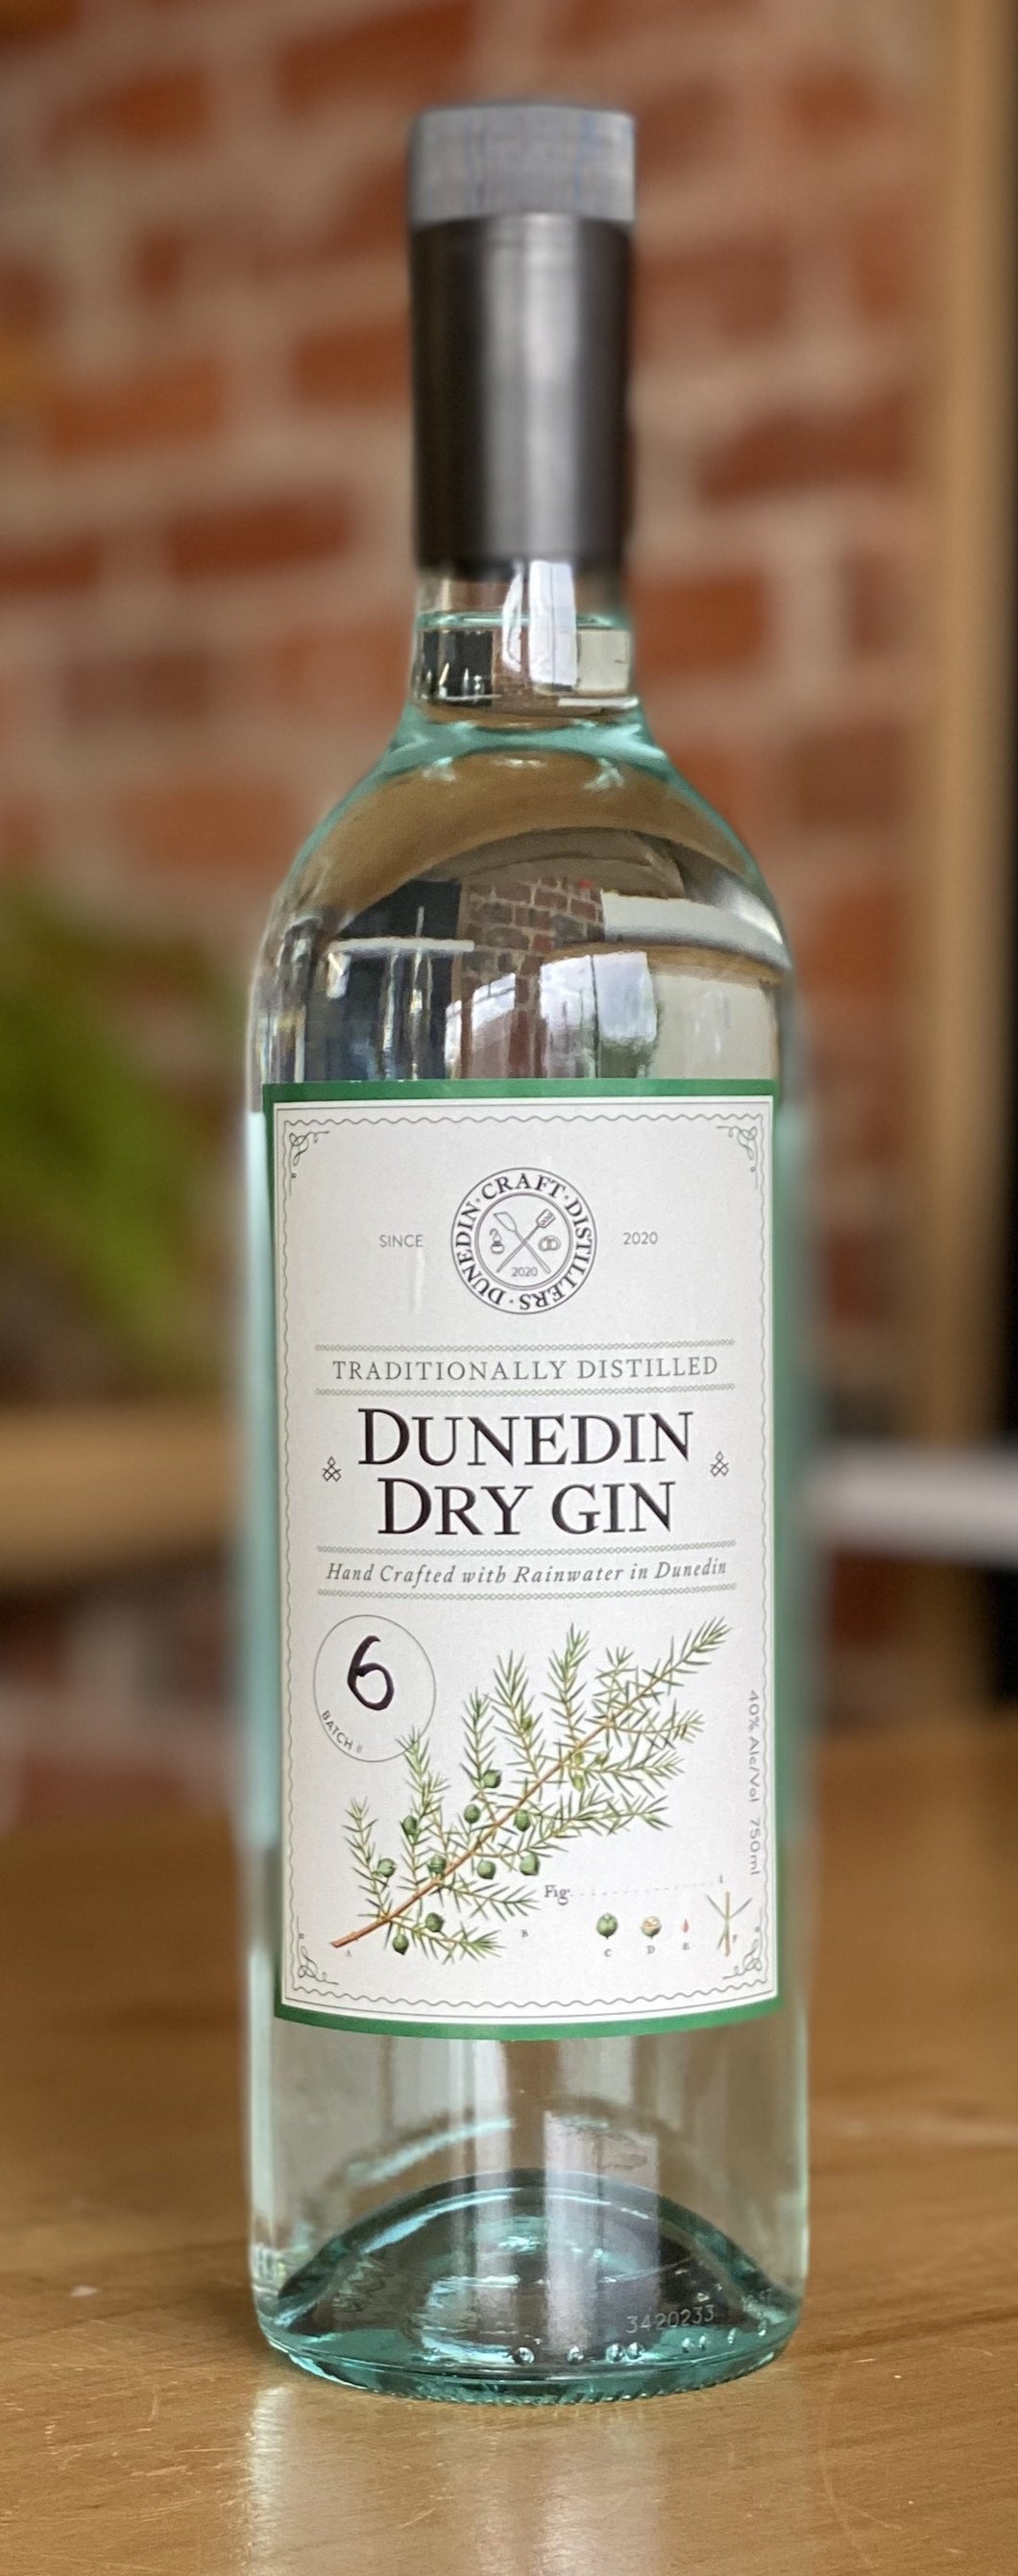 Dunedin Dry Gin